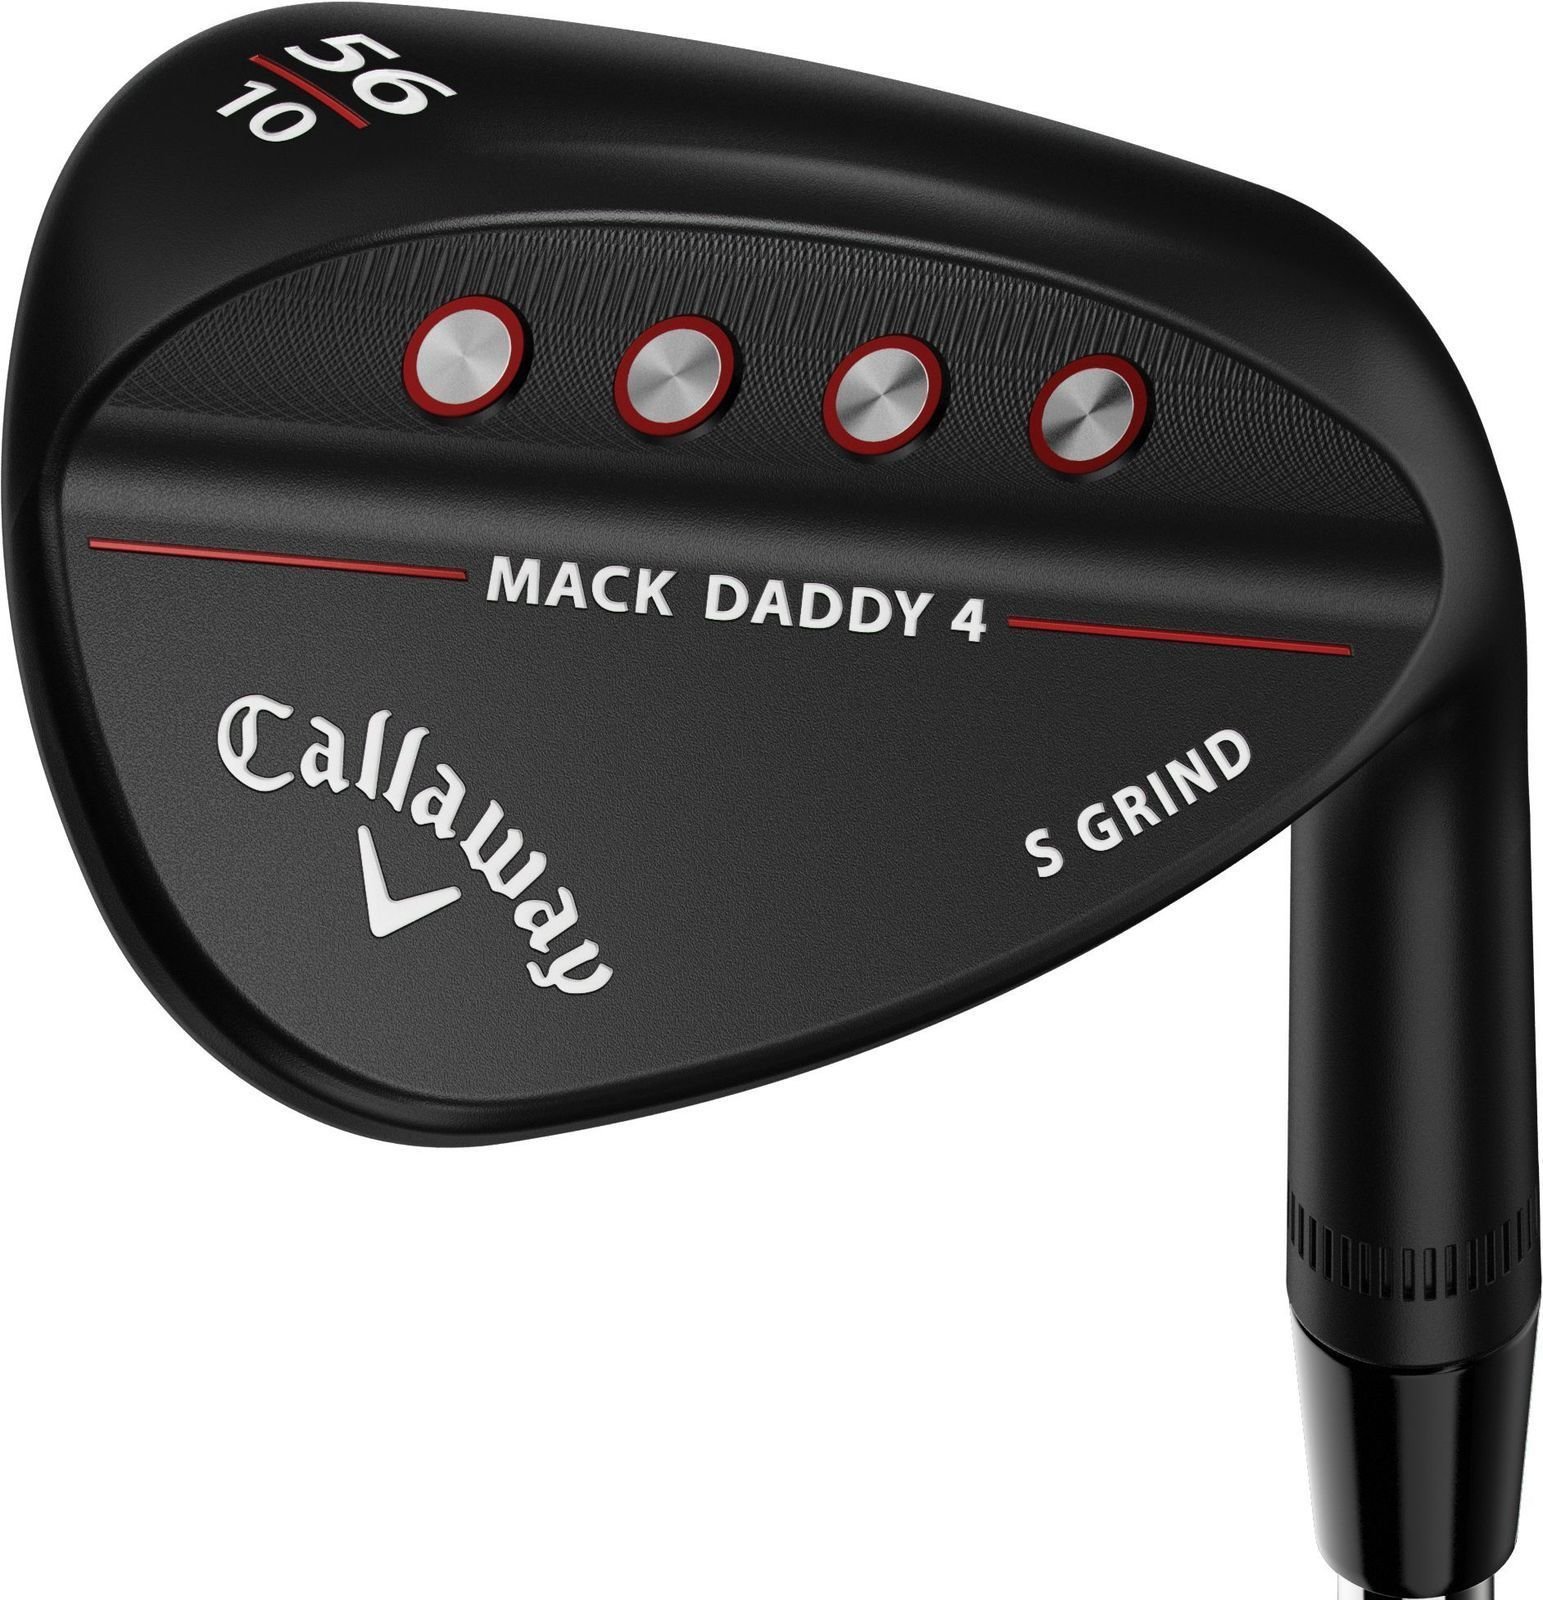 Club de golf - wedge Callaway Mack Daddy 4 Black Wedge 56-10 S-Grind droitier